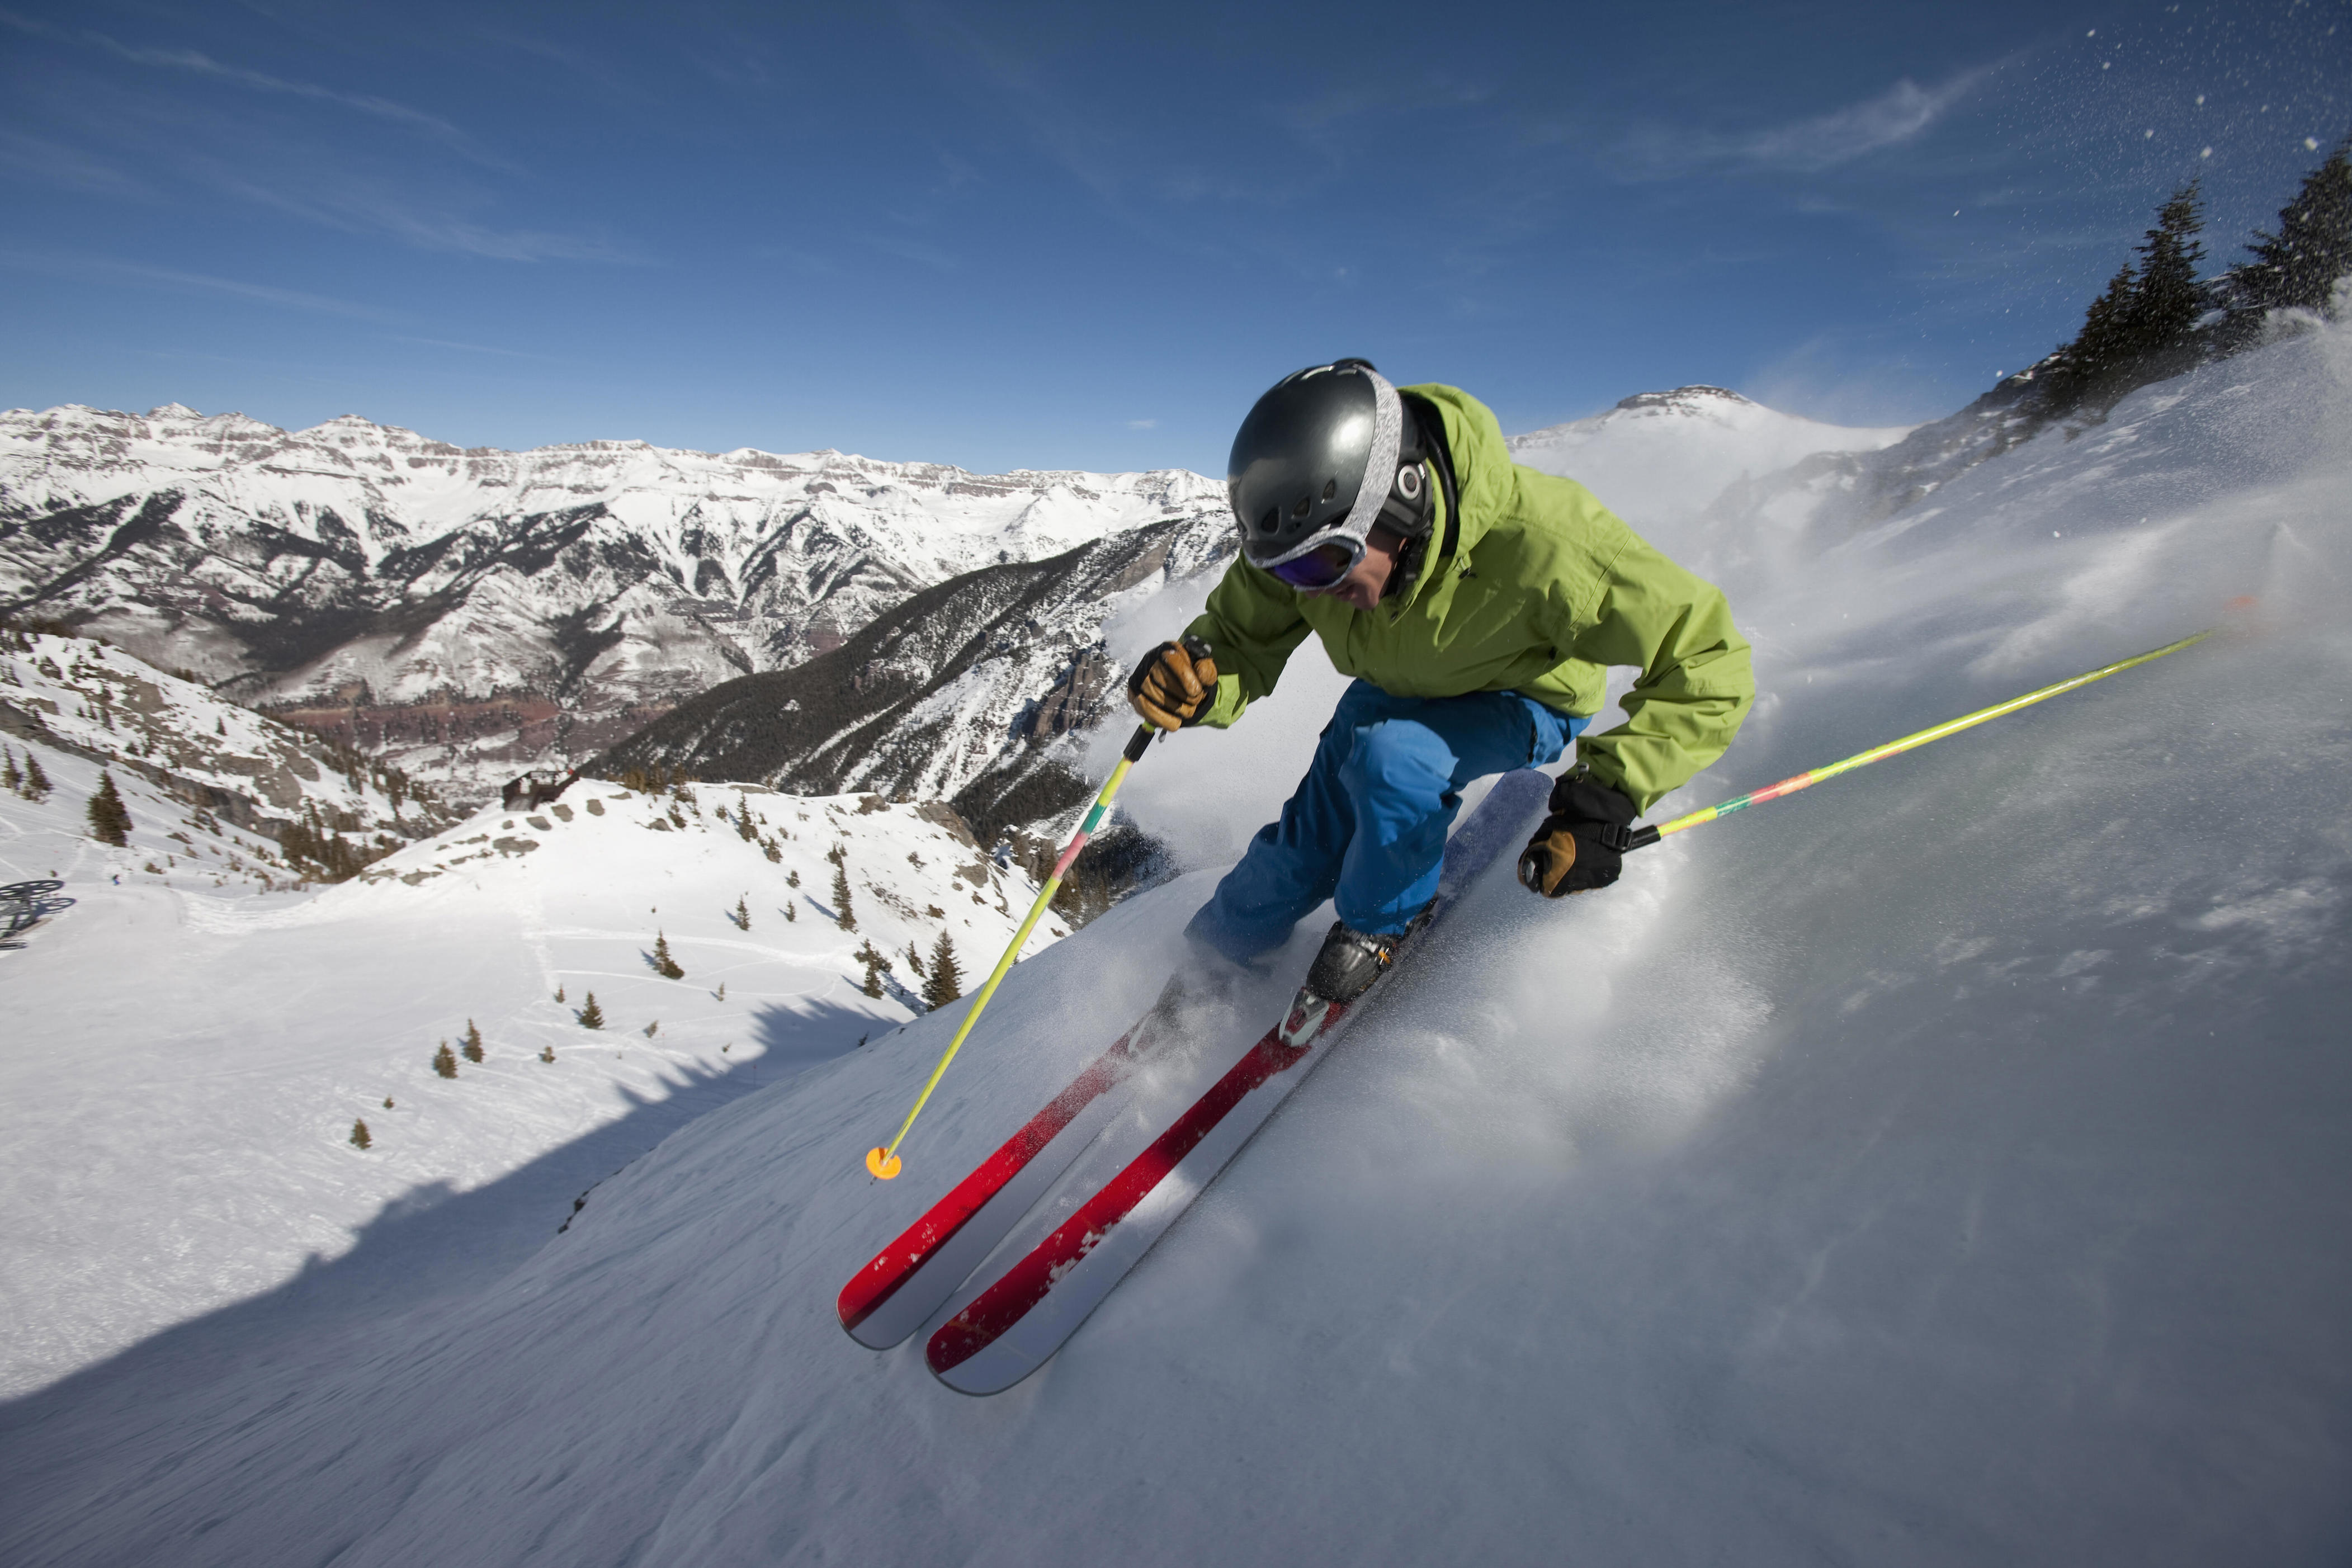 Skiing pictures. Горнолыжный спорт. Горные лыжи. Горные лыжи спорт. Горнолыжник.